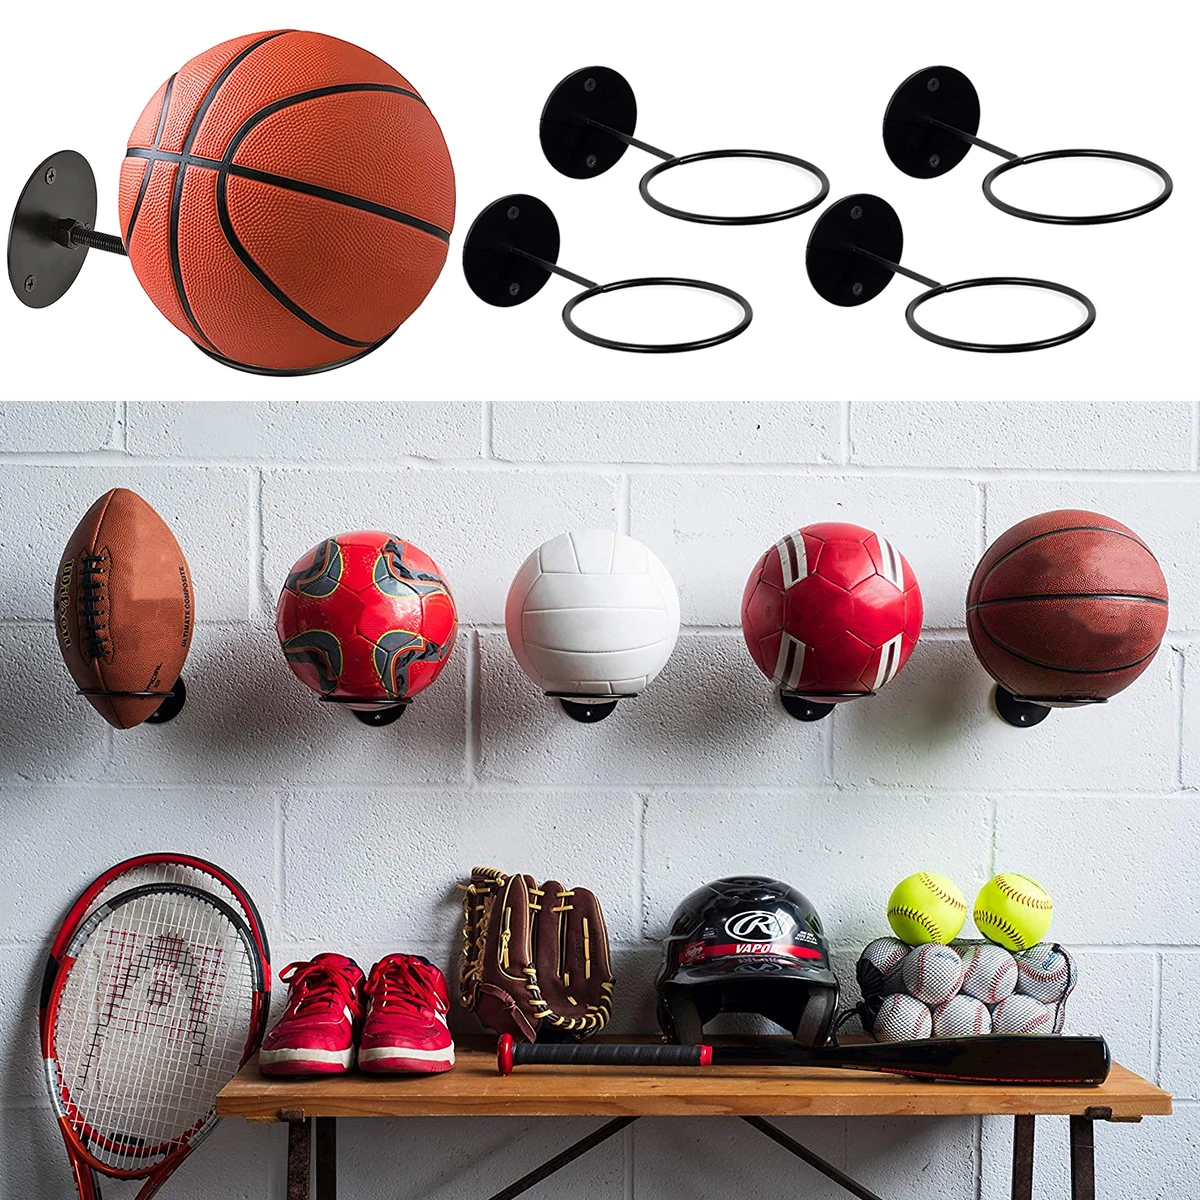 Wall-Mount Ball Racks Iron Basketball Storage Display Holder Football Rugby Hanging Stand Space Saving for Home Decor